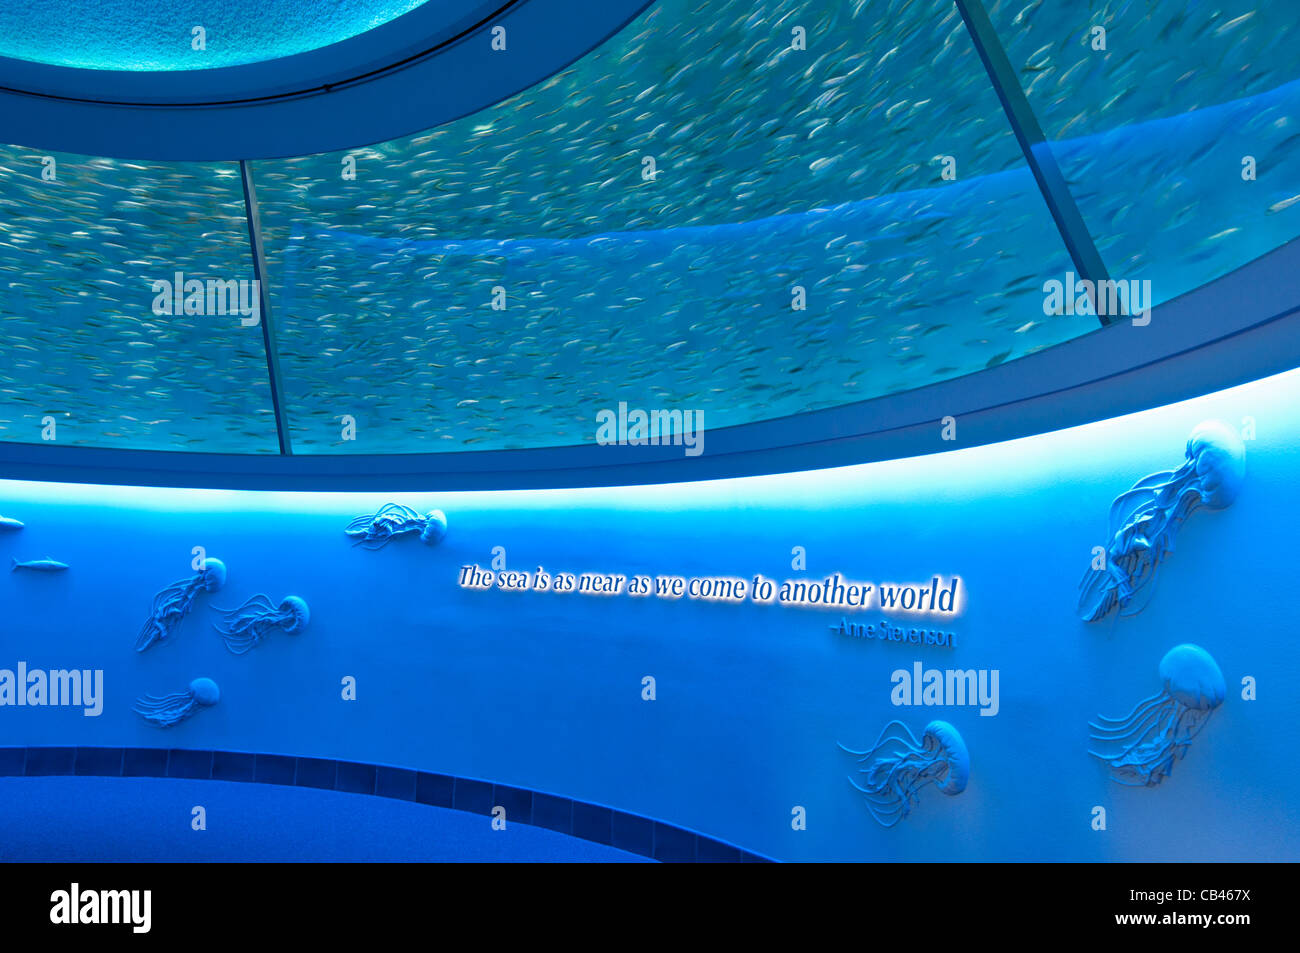 The magnificent Open Sea Exhibit at the Monterey Bay Aquarium. Stock Photo